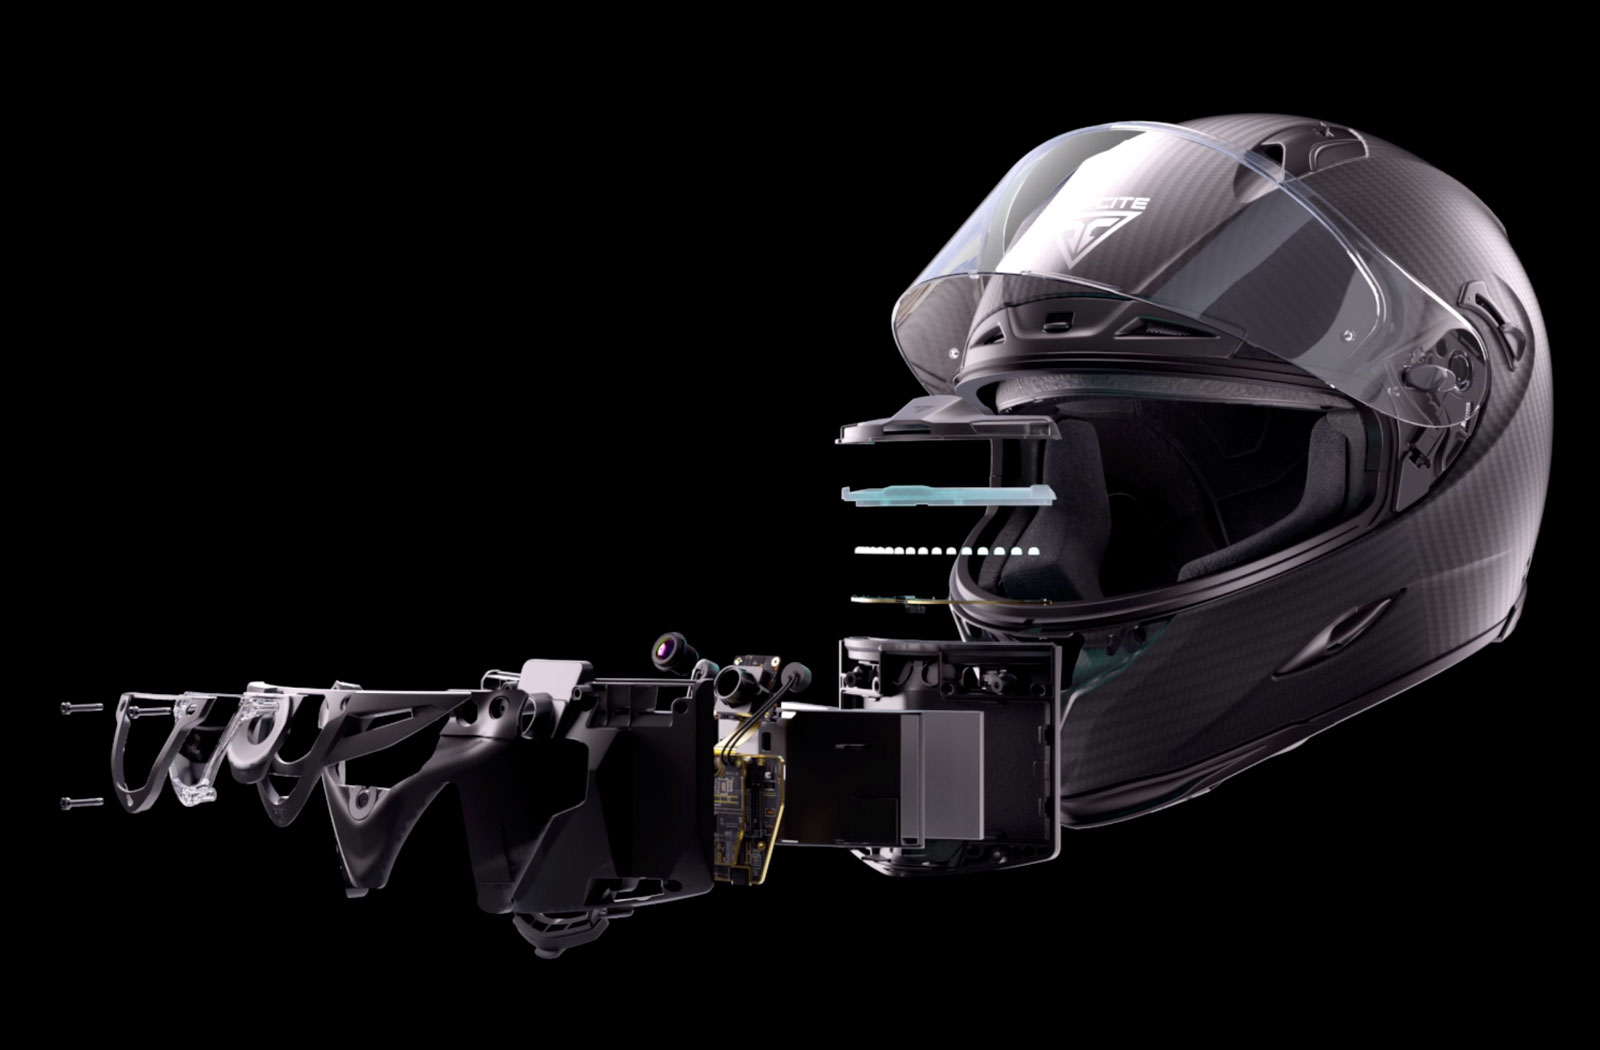 Inside the Forcite Smart Motorcycle helmet